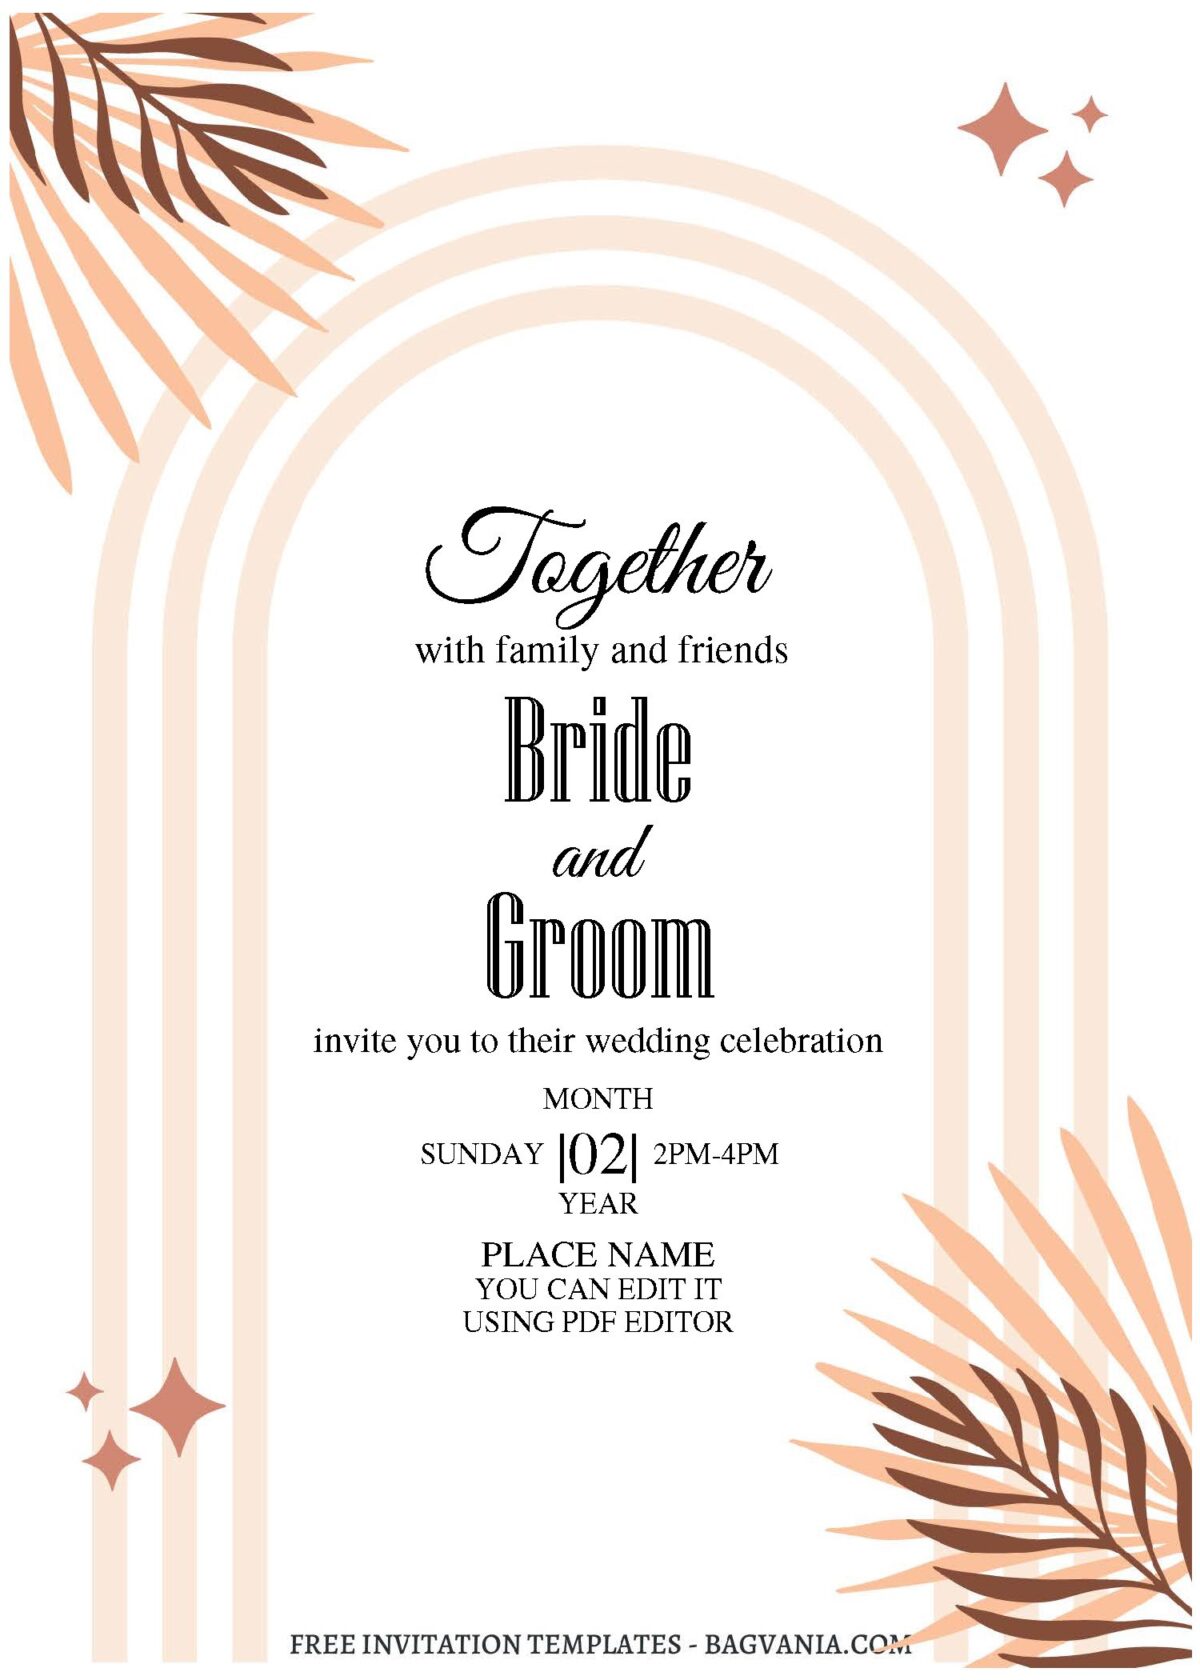 (Free Editable PDF) Boho Chic Wedding Invitation Templates with arch frame